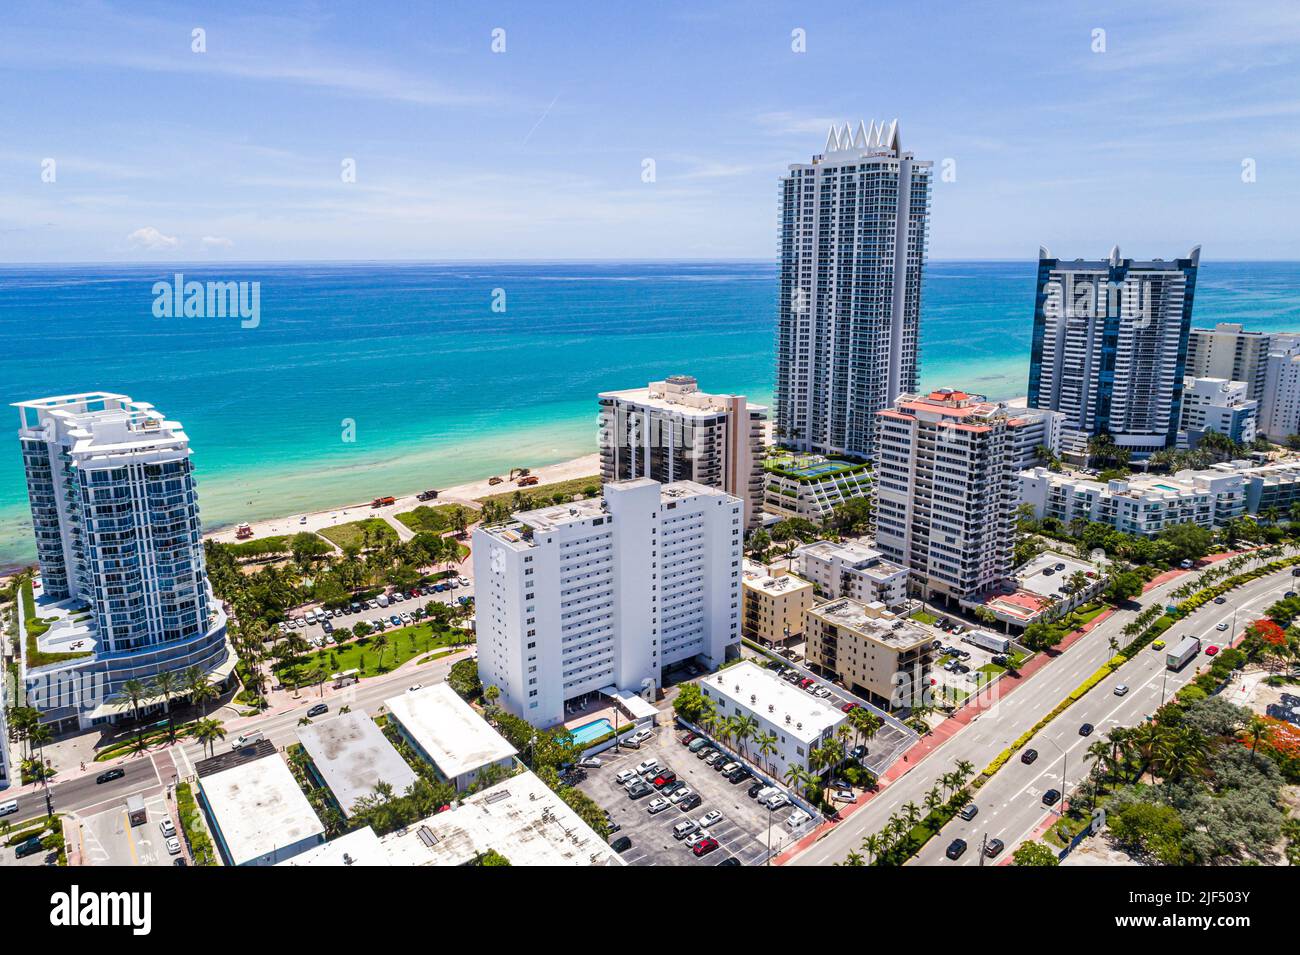 Miami Beach Florida,aerial overhead view from above,Atlantic Ocean oceanfront beachfront waterfront condominium buildings,Akoya high rise condominiums Stock Photo